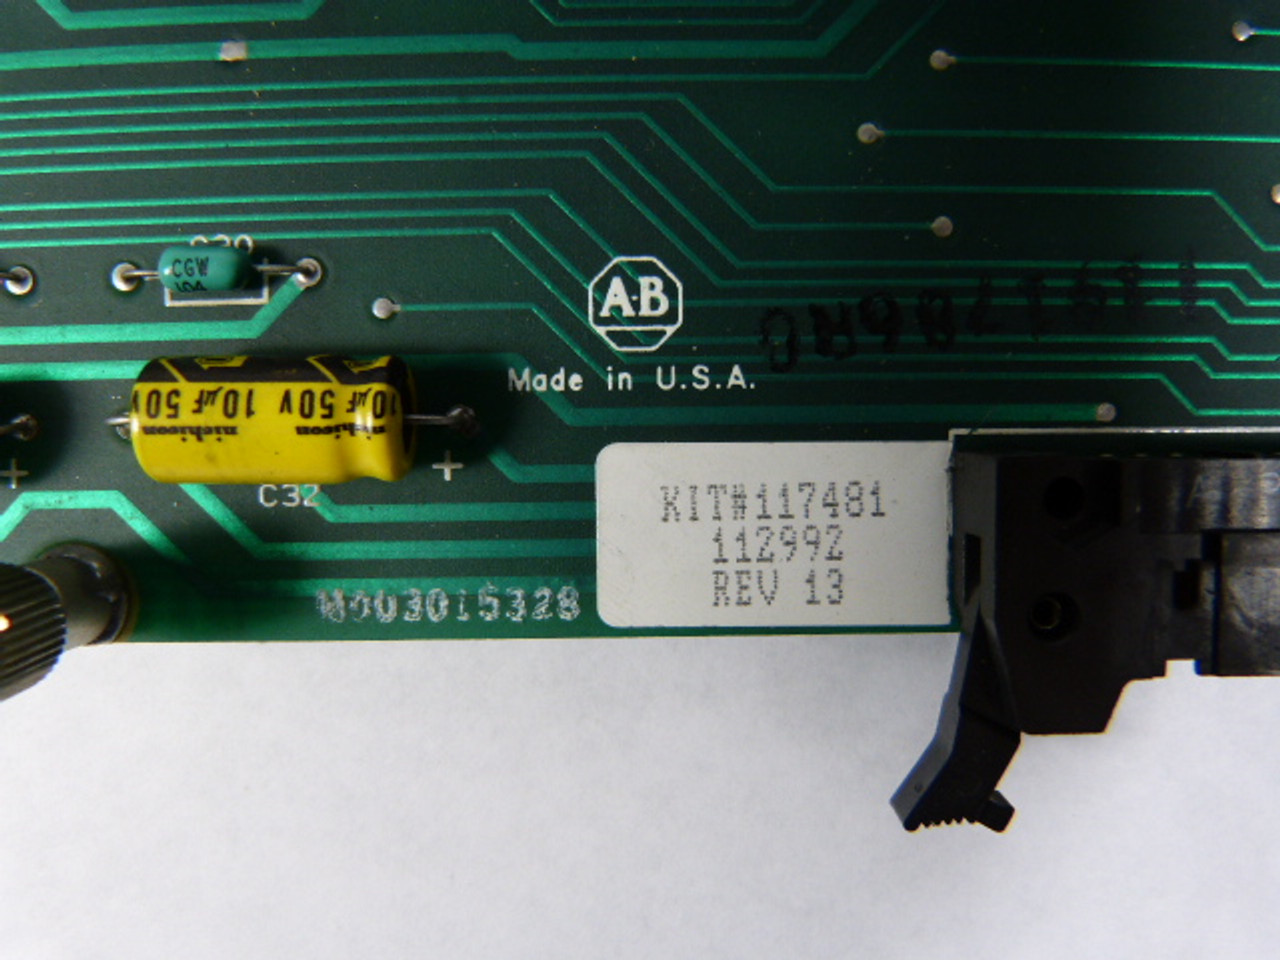 Allen-Bradley 117481 PC Control Board USED